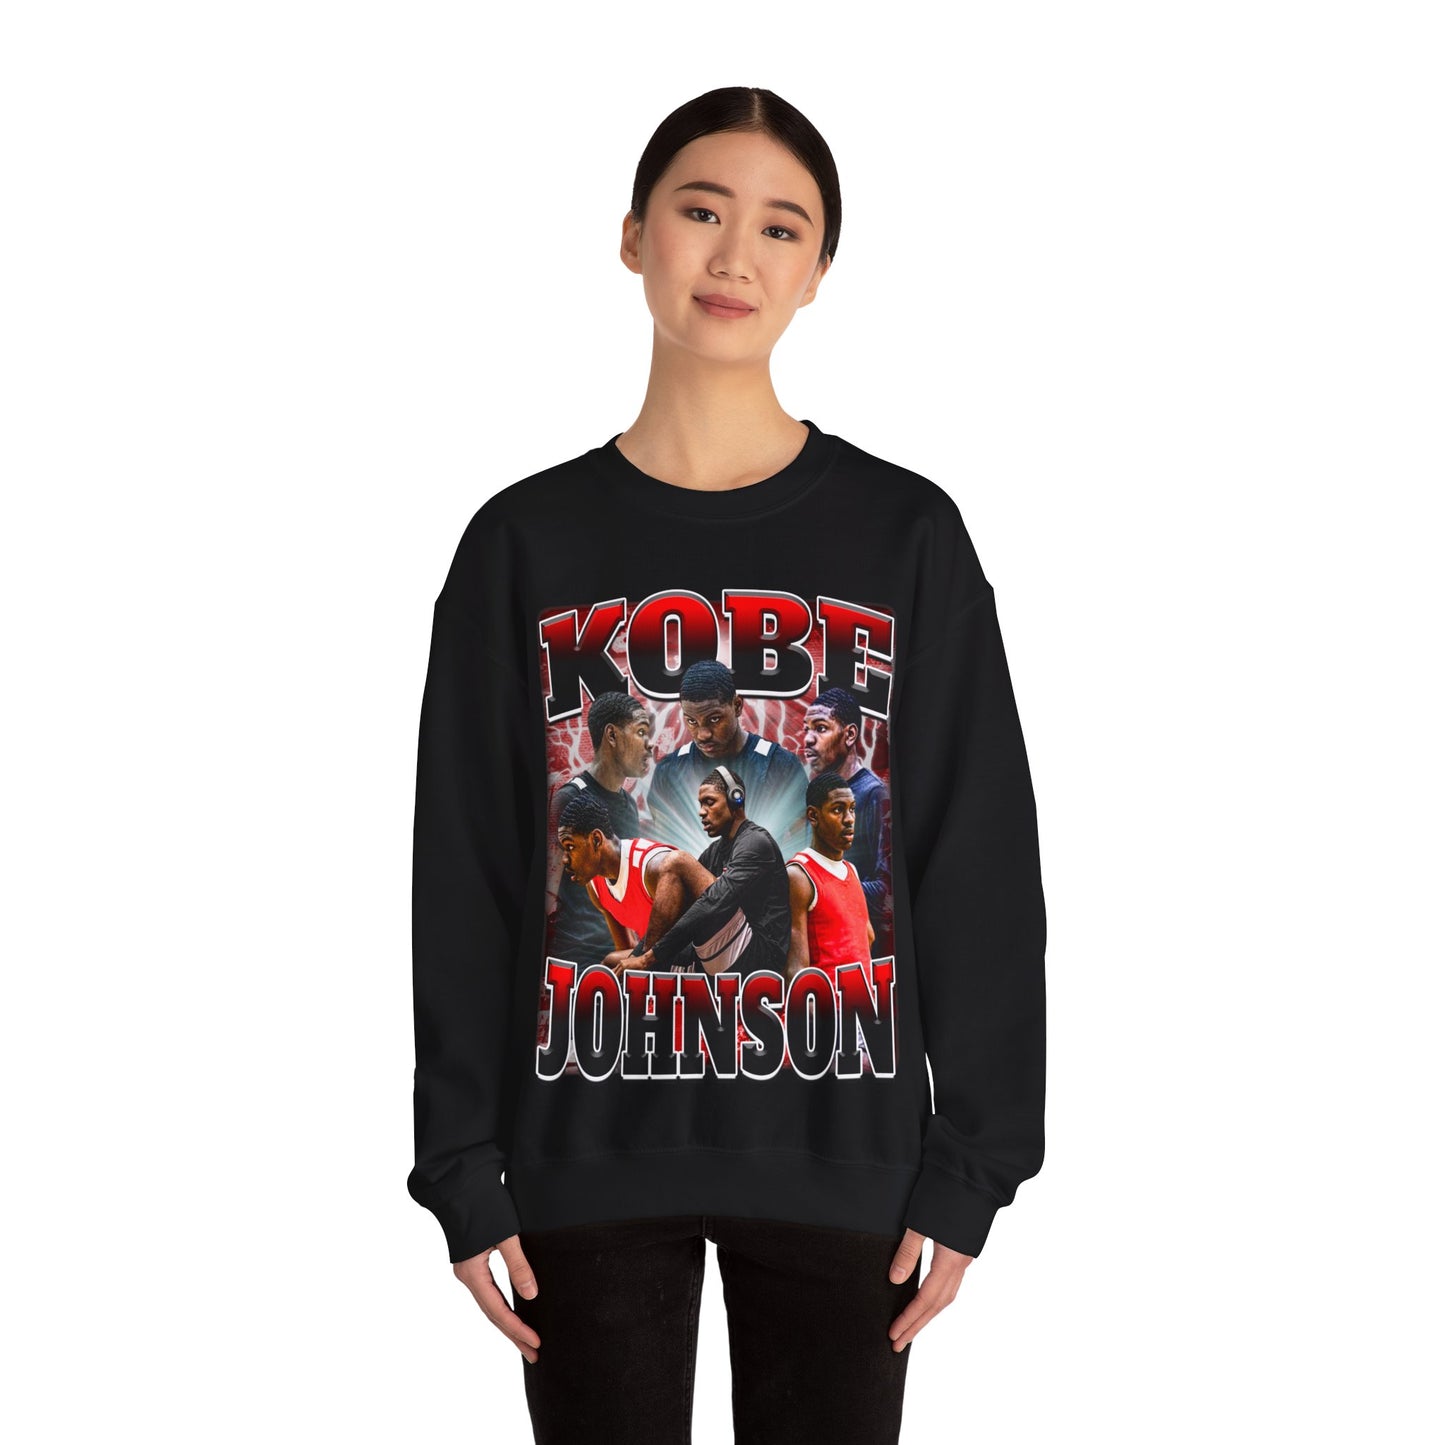 Kobe Johnson Crewneck Sweatshirt